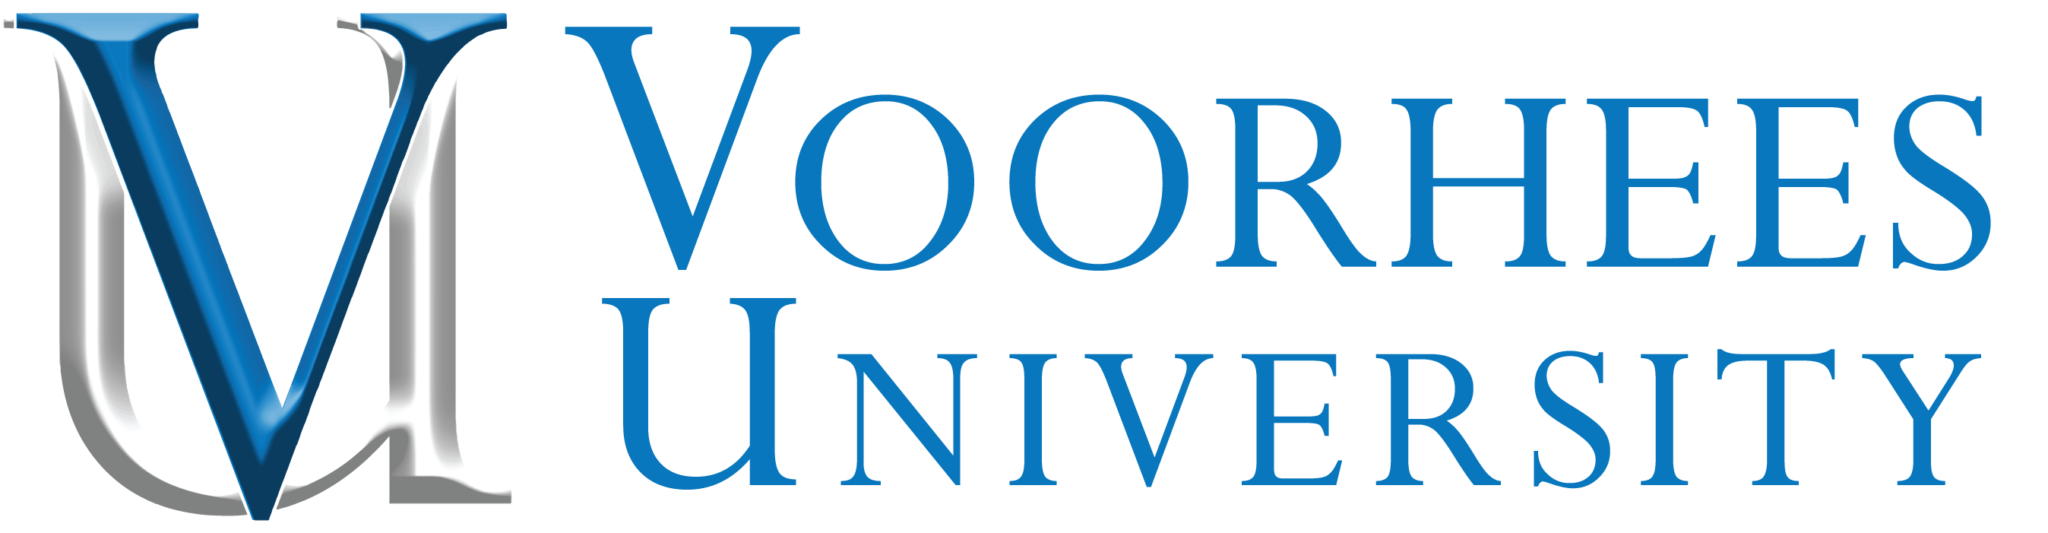 Voorhees University partnership receives $18.9 million grant to